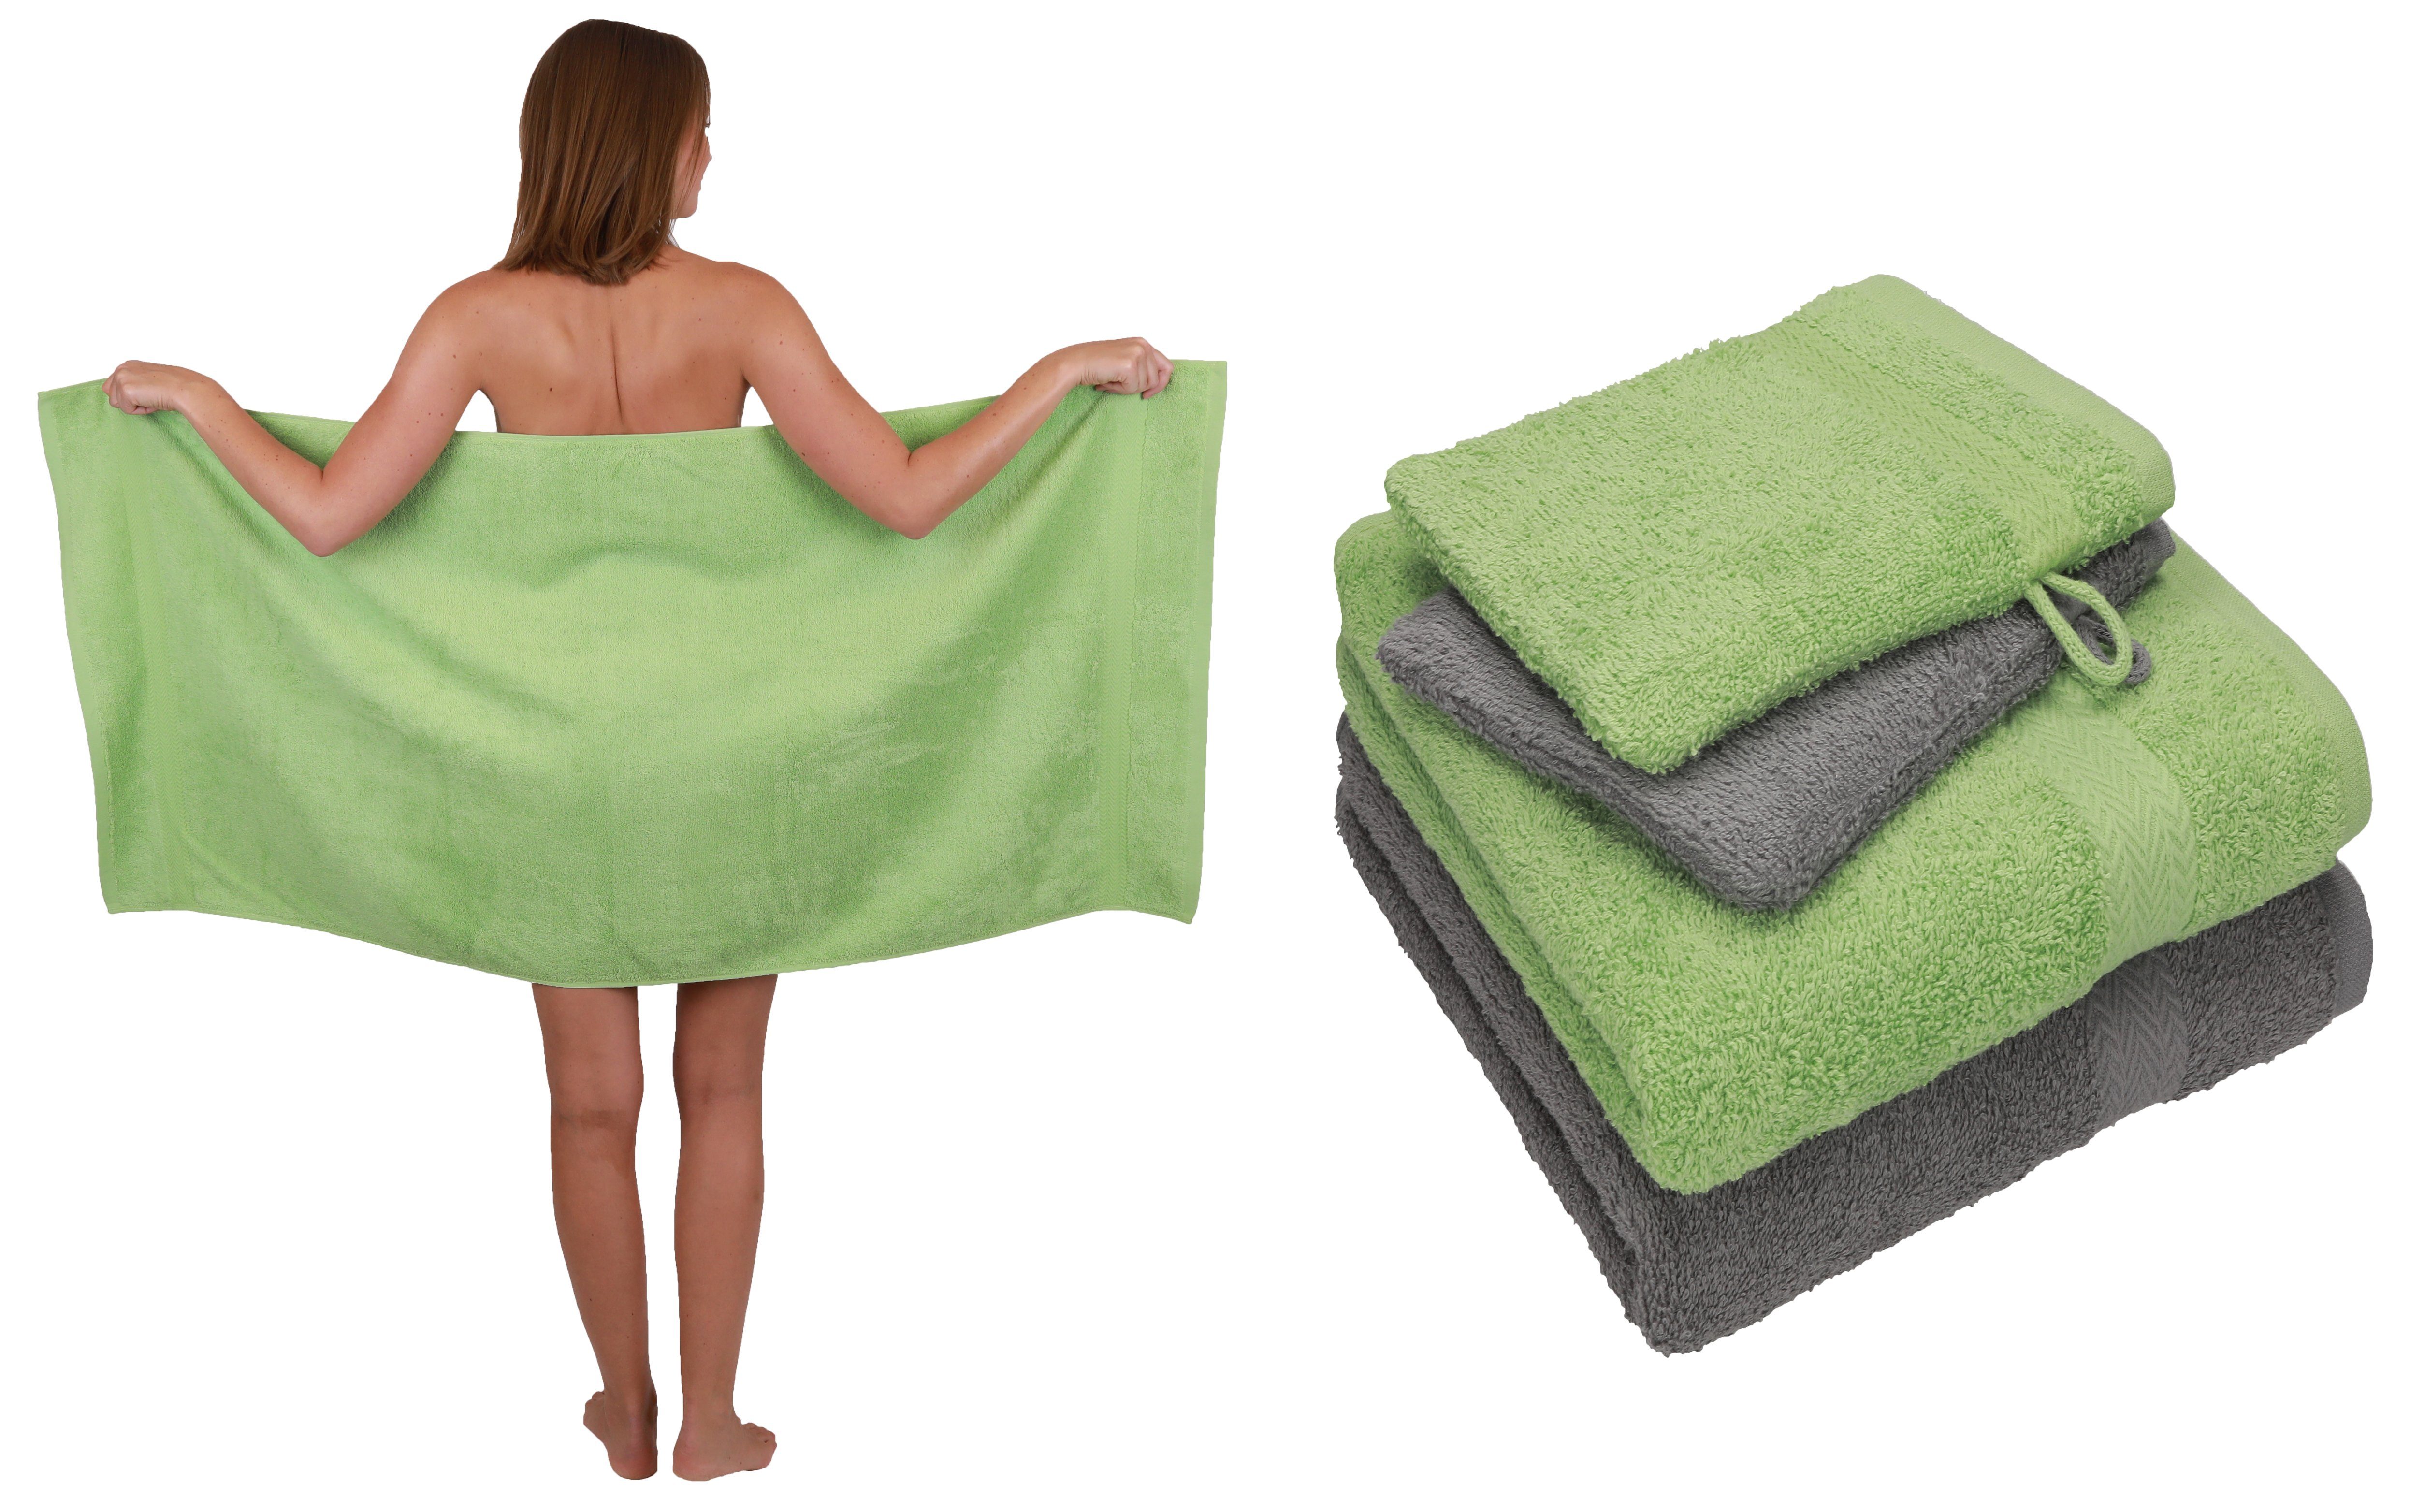 Betz Handtuch Set apfelgrün Baumwolle, 2 2 (5-tlg) 1 Pack Set Single Handtücher 5 Waschhandschuhe, Baumwolle 100% Handtuch Betz Duschtuch TLG